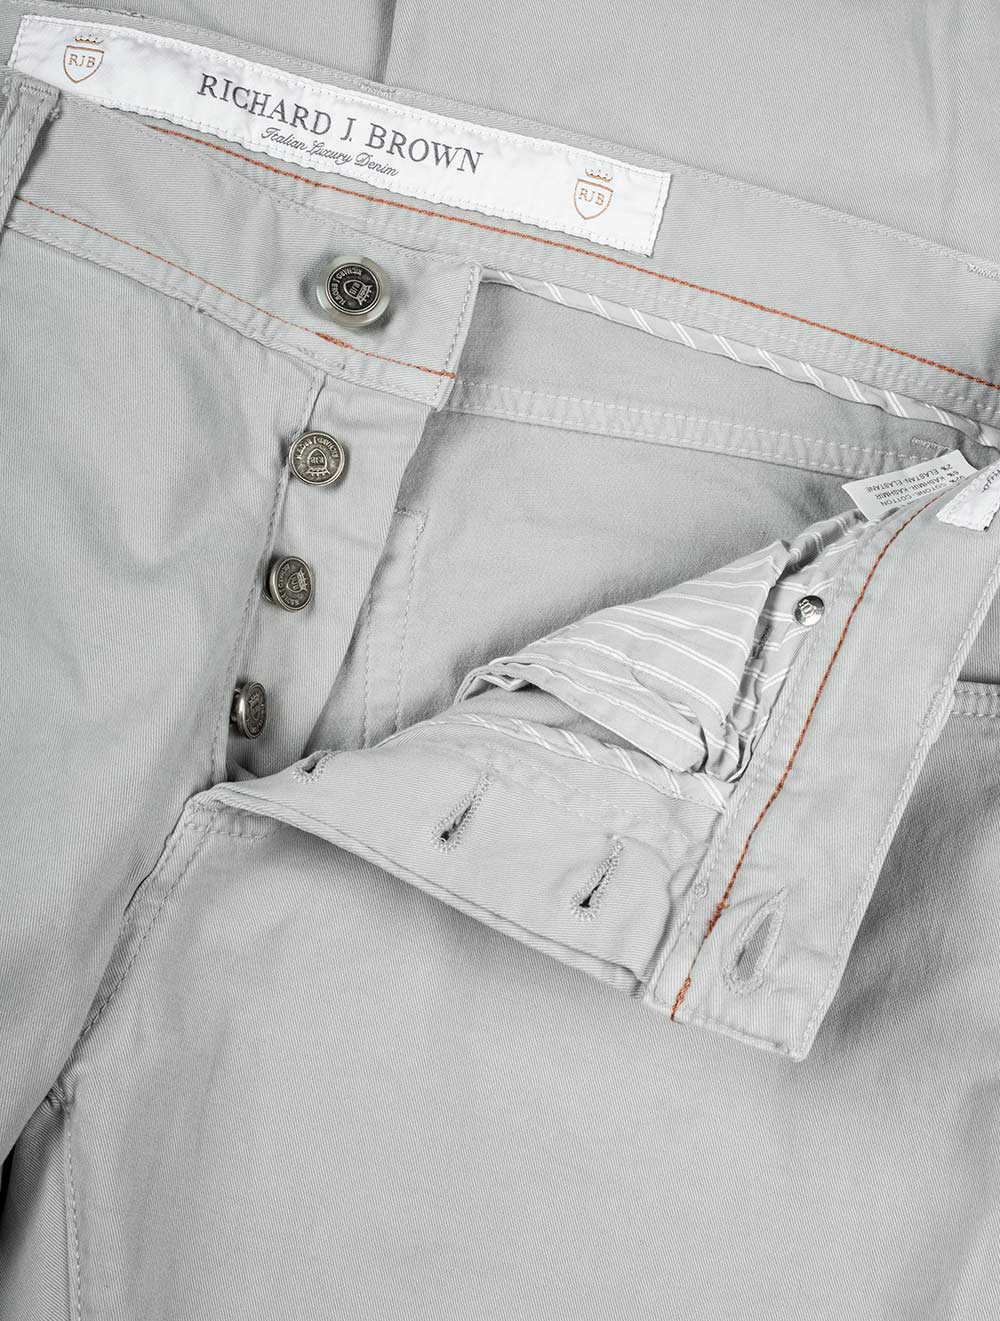 Luxury Cotton Cashmere Jeans Light Grey 418